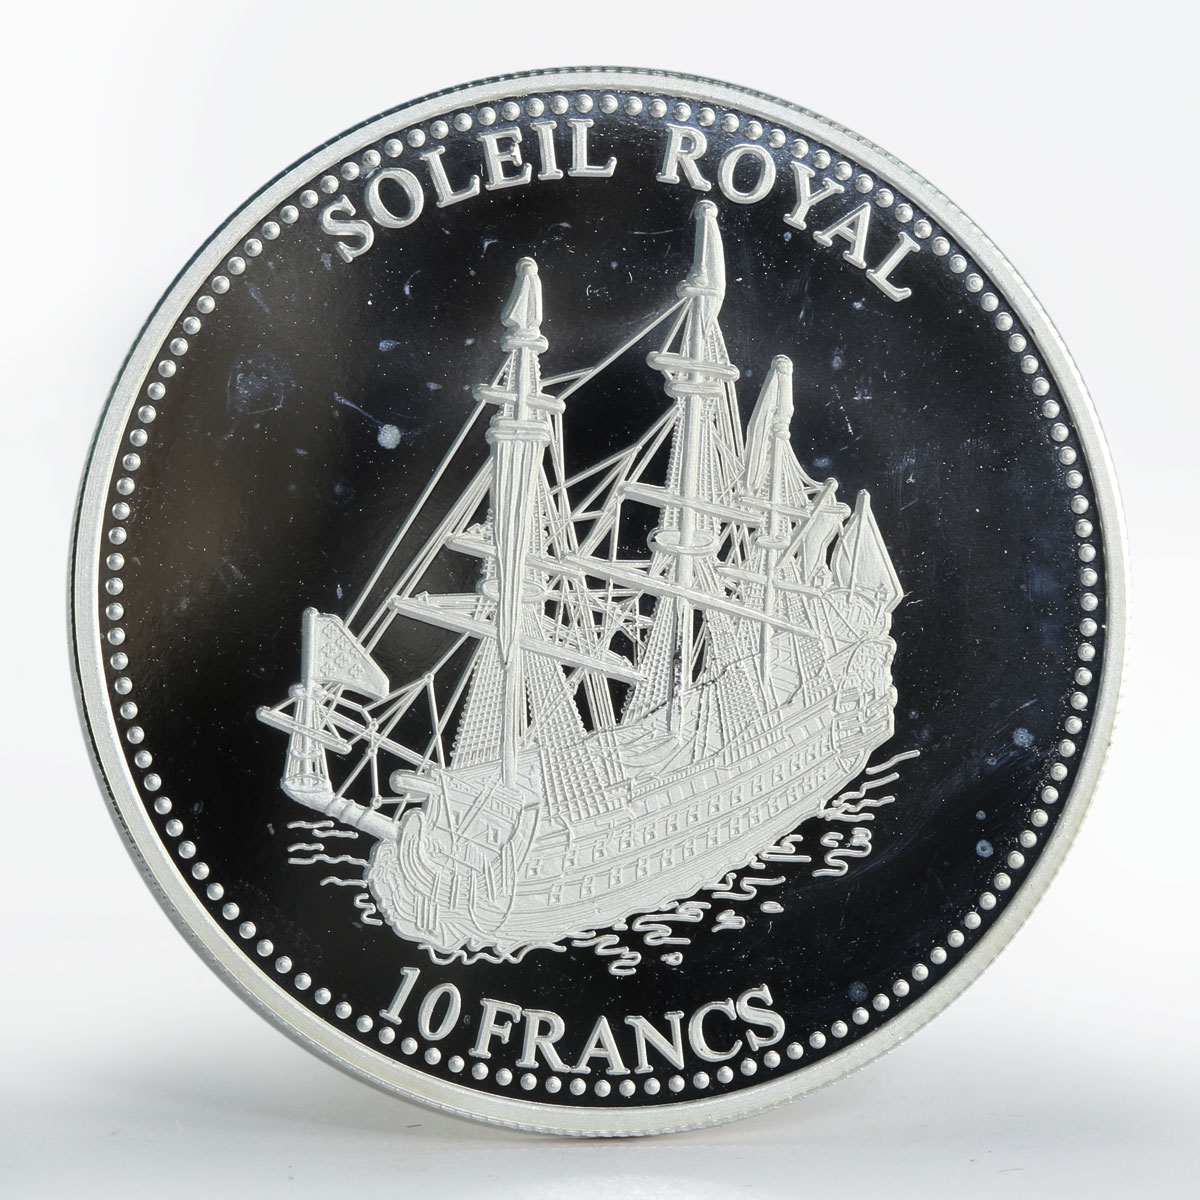 Congo 10 francs Ship Soleil Royal silver proof coin 2001